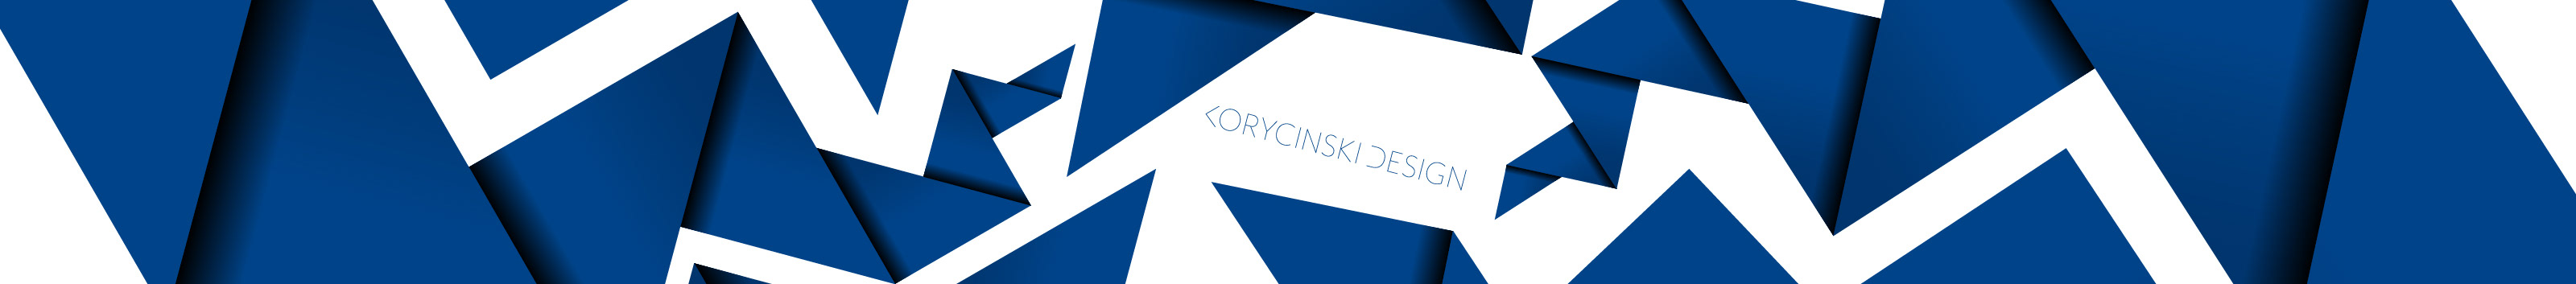 Jan Koryciński's profile banner